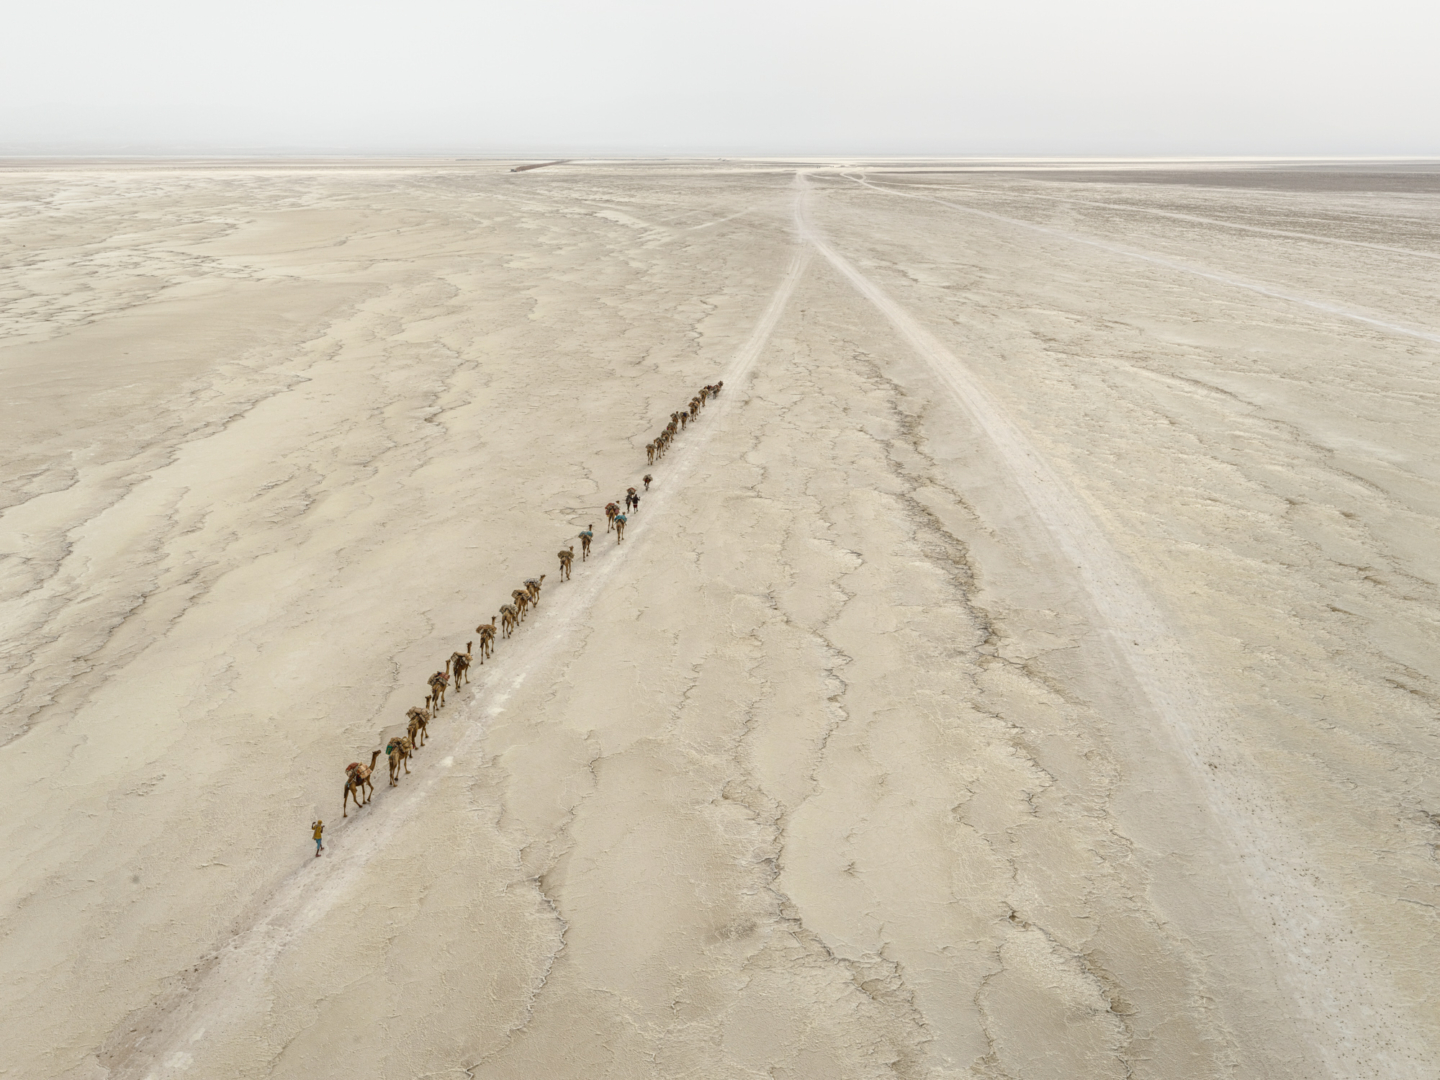 Camel Caravan #1, Danakil Depression, Ethiopia, 2018